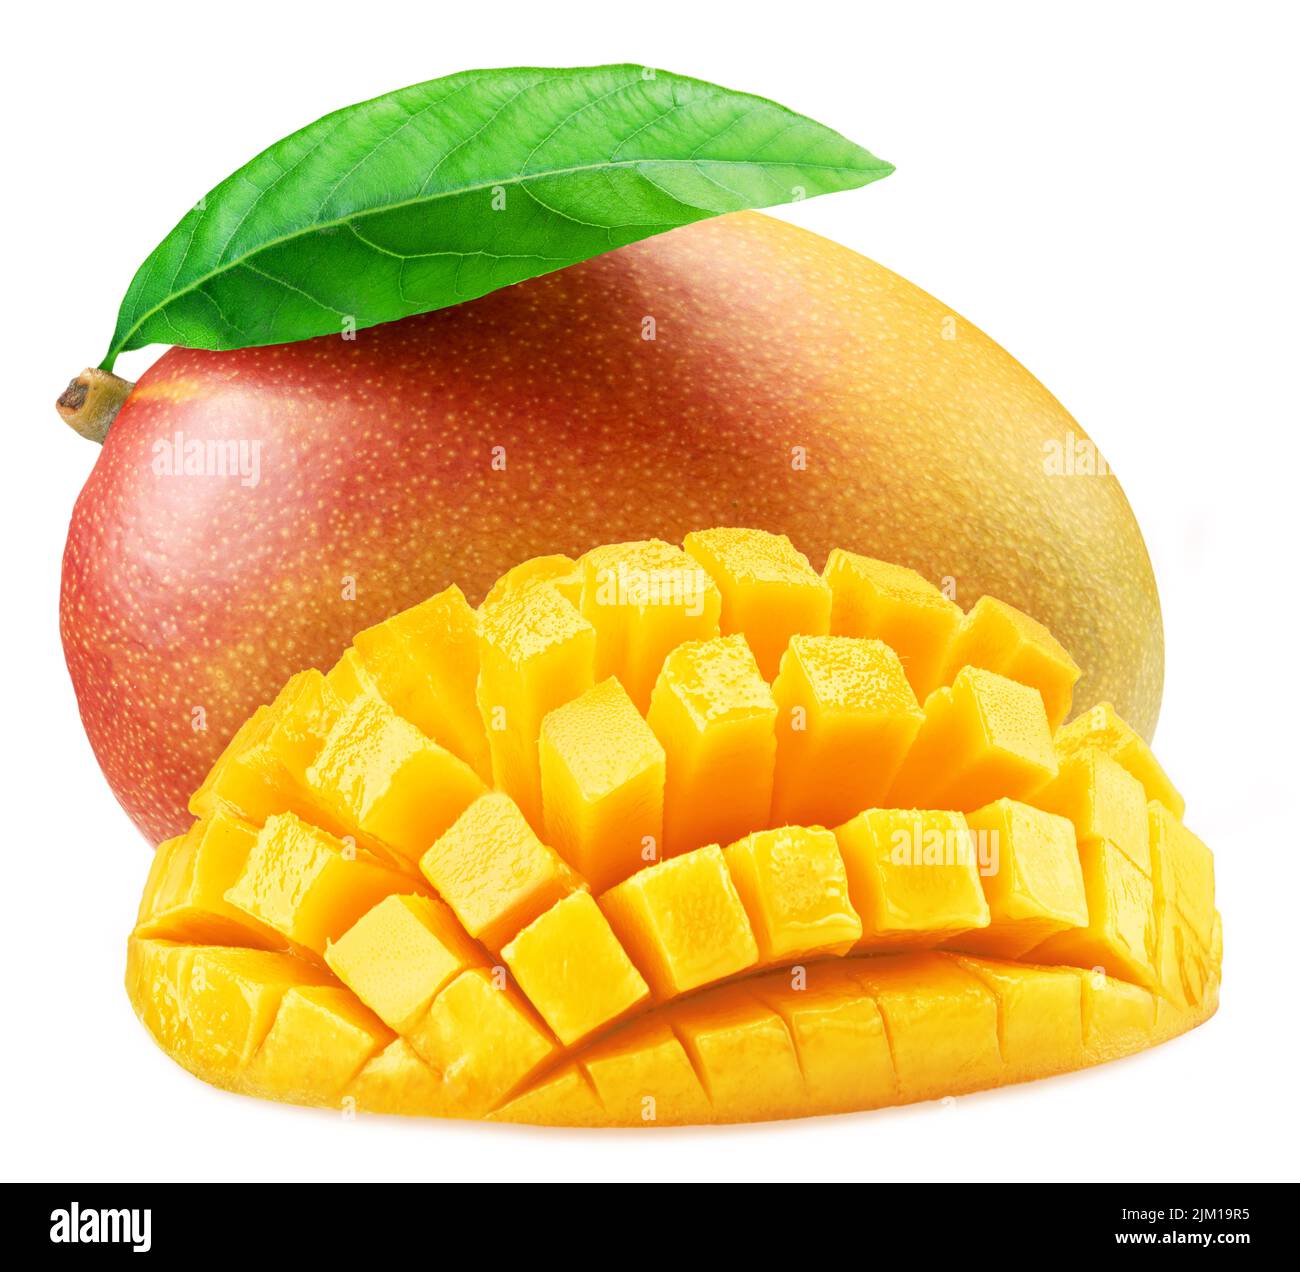 Mango fruit with green leaf and mango cut in hedgehog style isolated on white background. Stock Photo